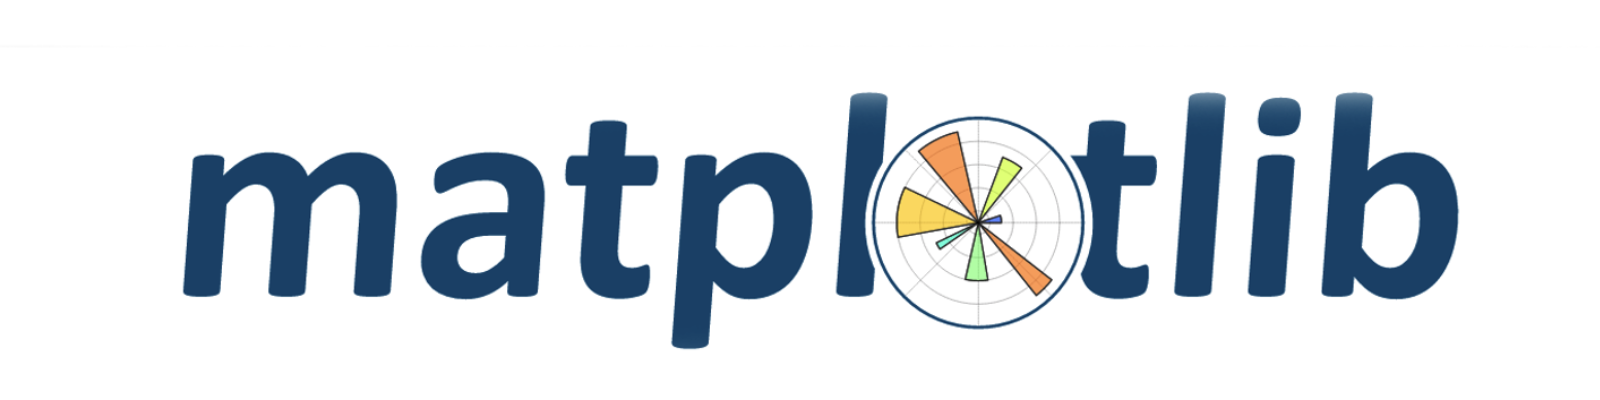 Matplotlib Logo.png